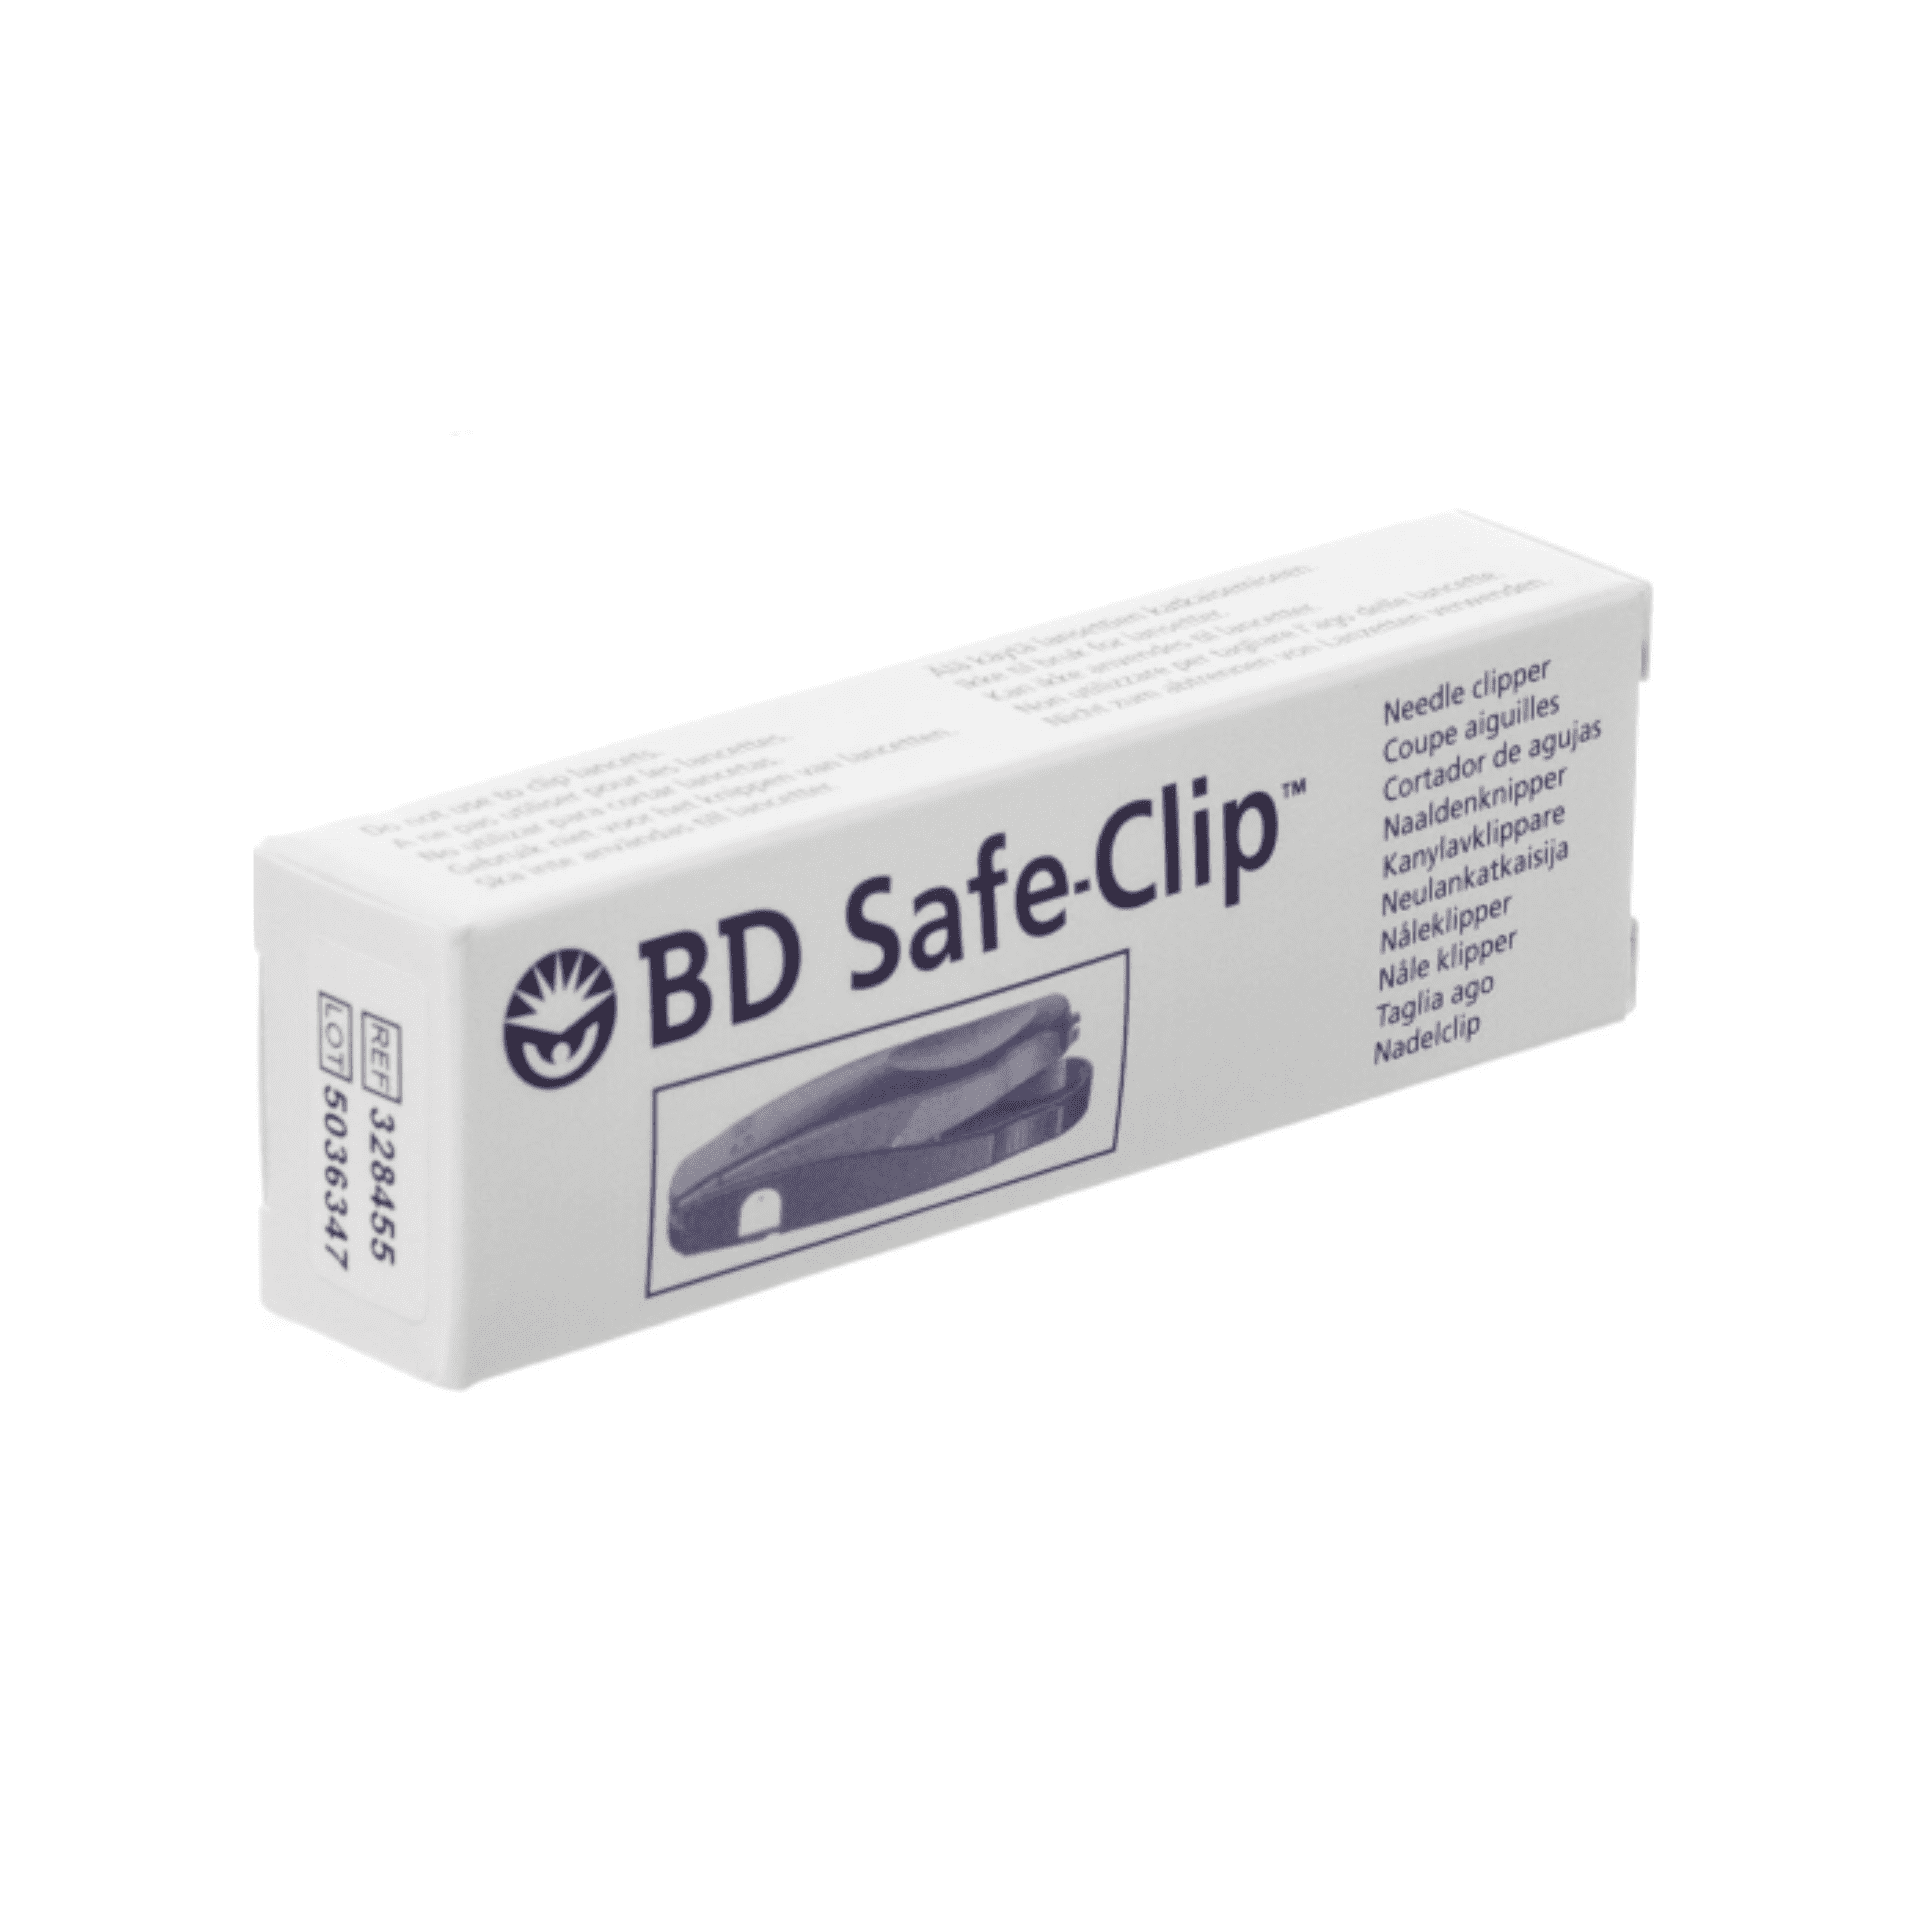 BD Safe-clip Naaldenknipper 328455